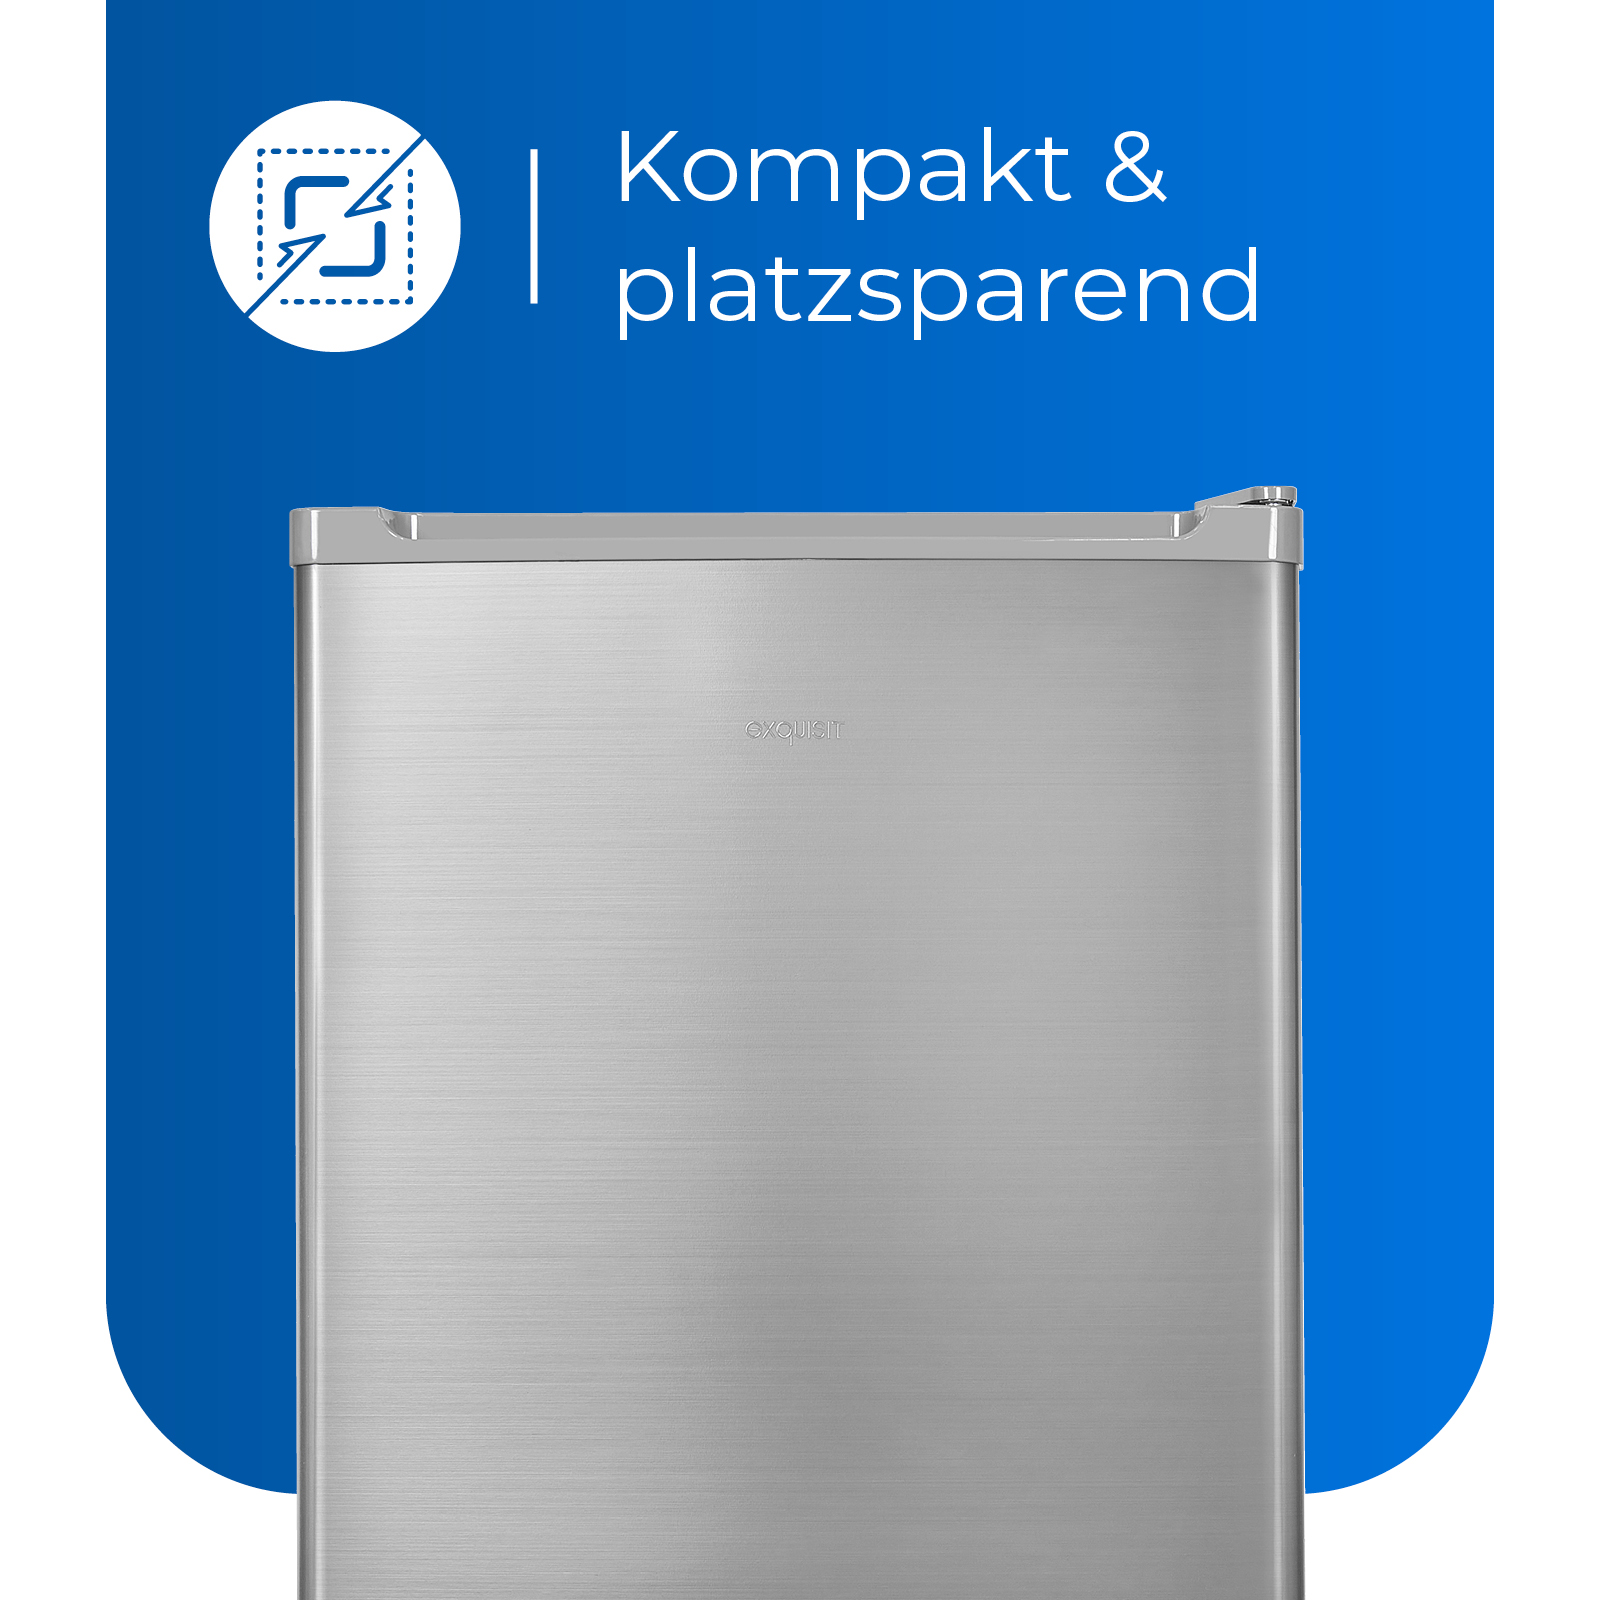 Kühlschrank inoxlook hoch, mm 510 (E, Edelstahloptik) Mini EXQUISIT KB05-V-040E